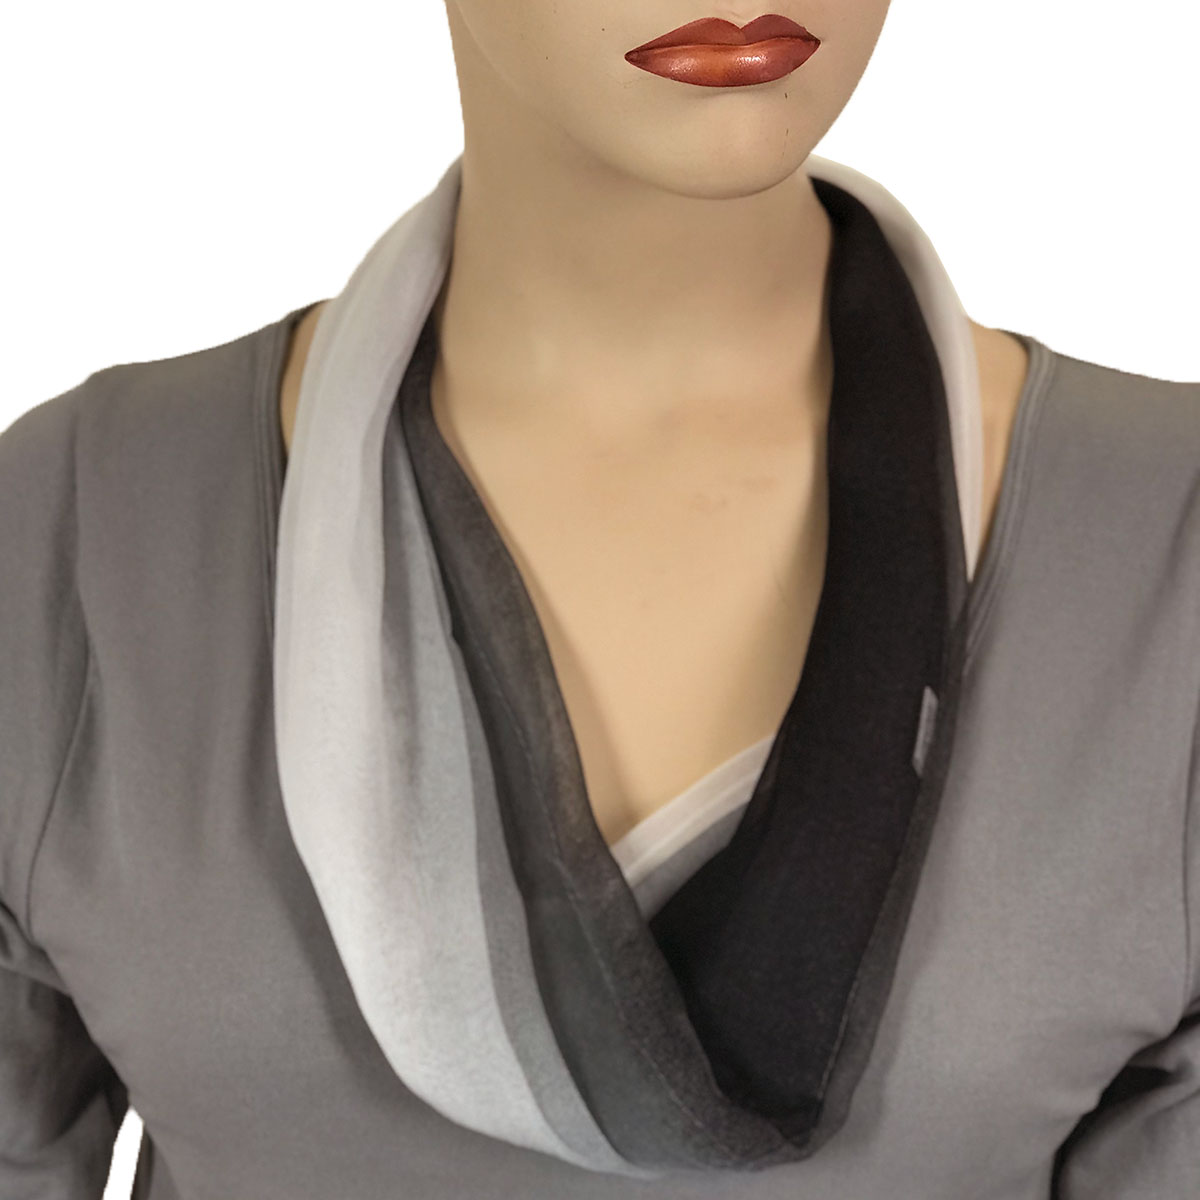 106BGW - Black-Grey-White Tri-Color<br>
Magnetic Clasp Silky Dress Scarf